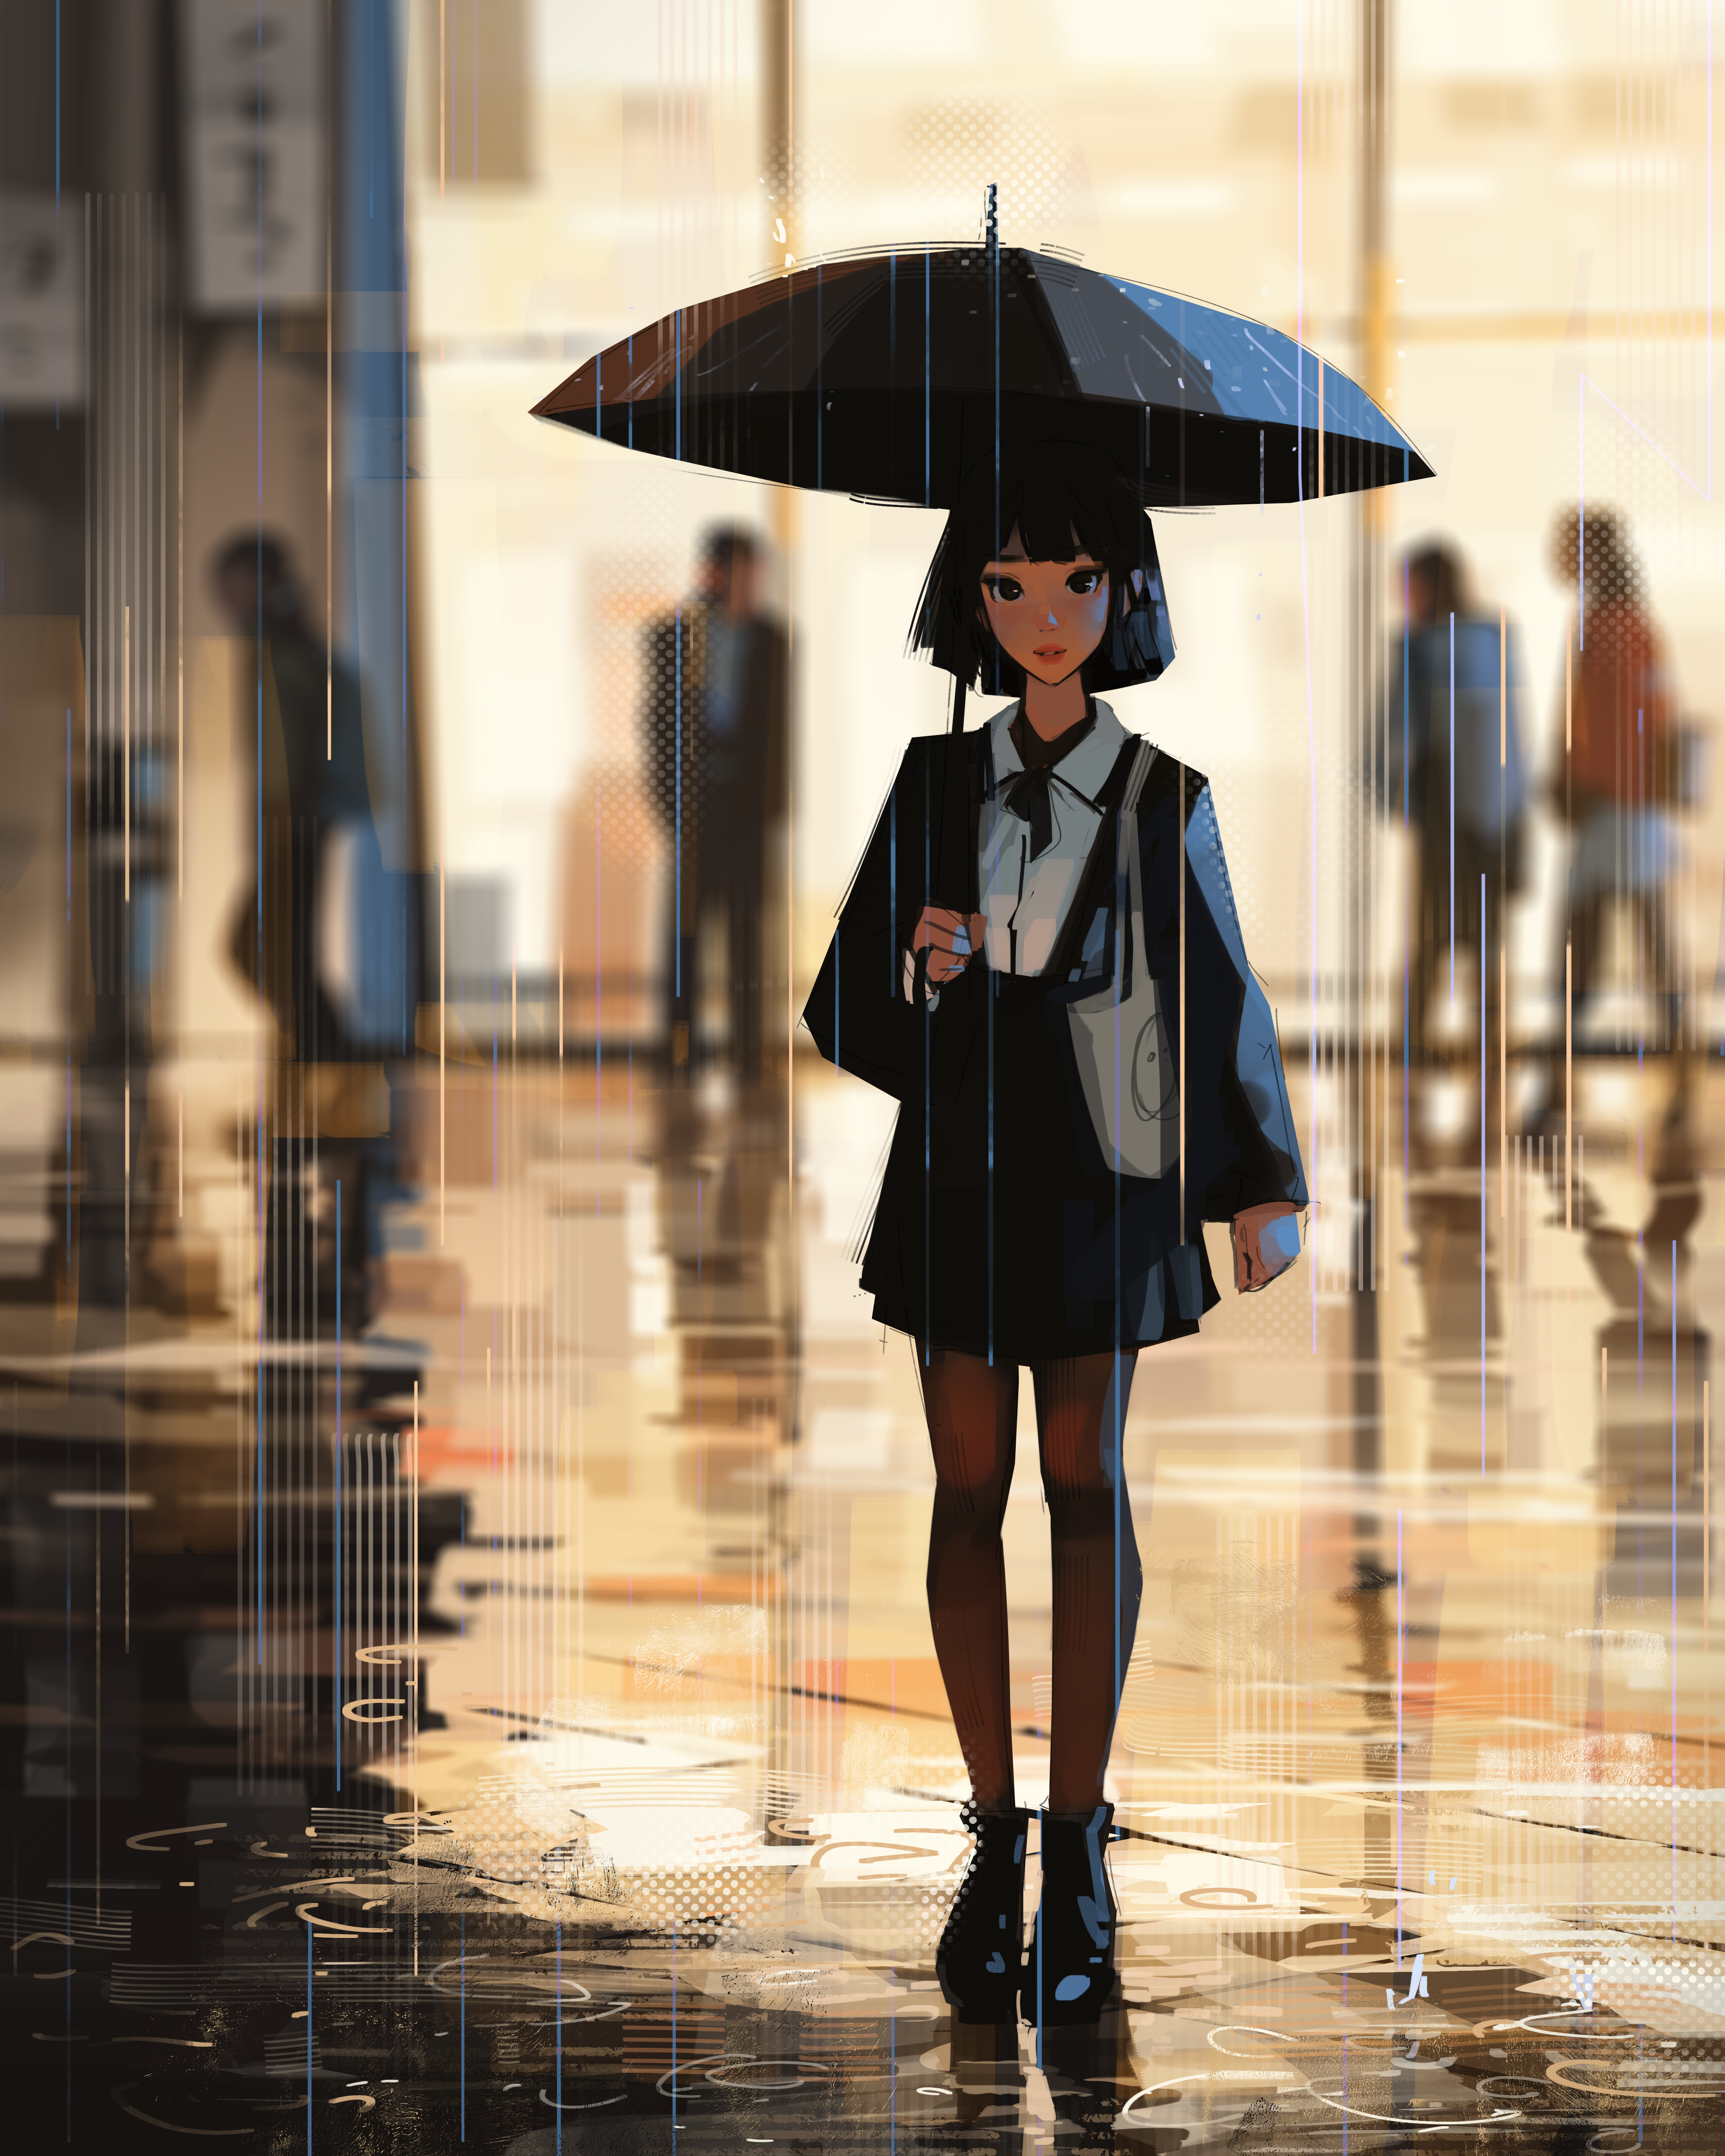 Sam Yang Digital Art Artwork Illustration Women Portrait Rain Looking At Viewer Umbrella Street Shor 4320x5400